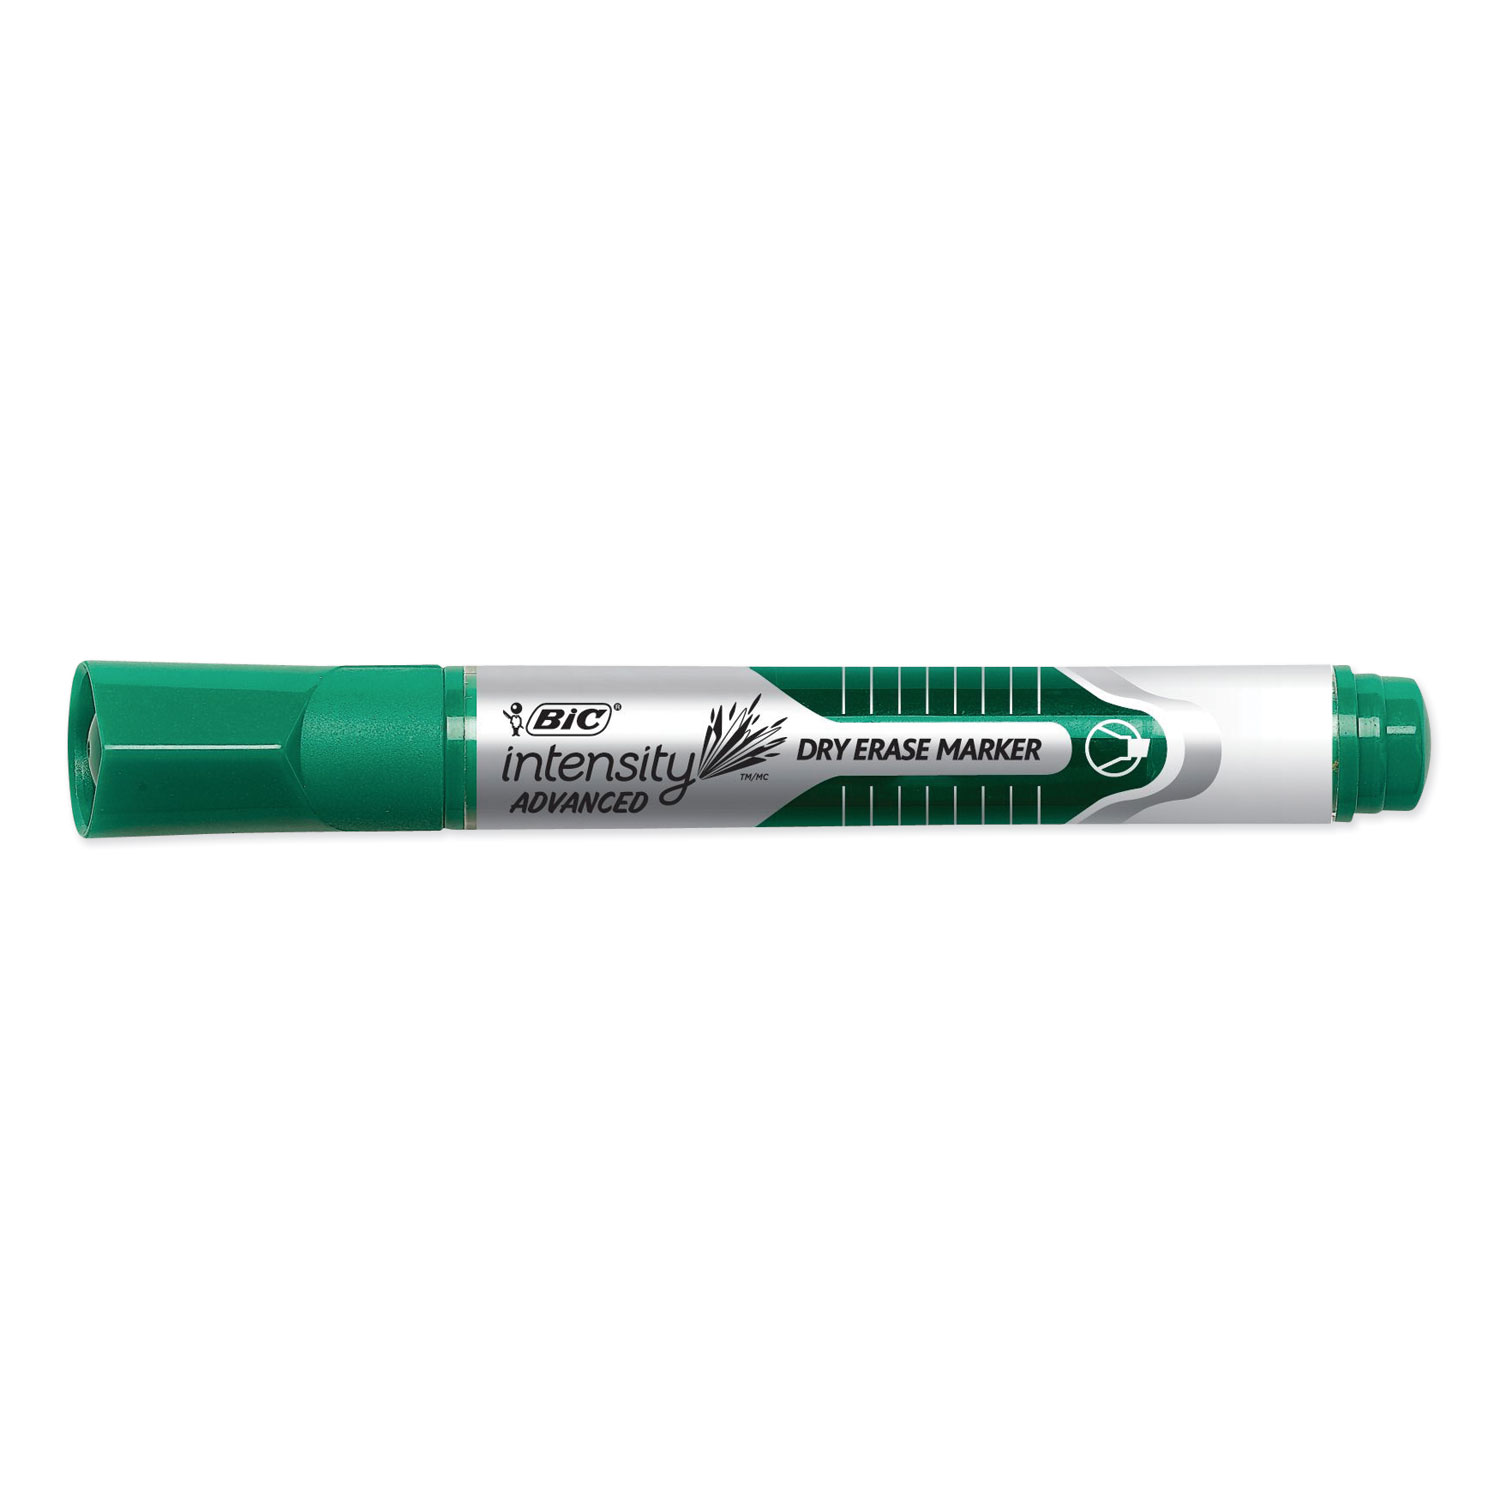 Intensity Tank-Style Advanced Dry Erase Marker, Broad Bullet Tip, Green, Dozen